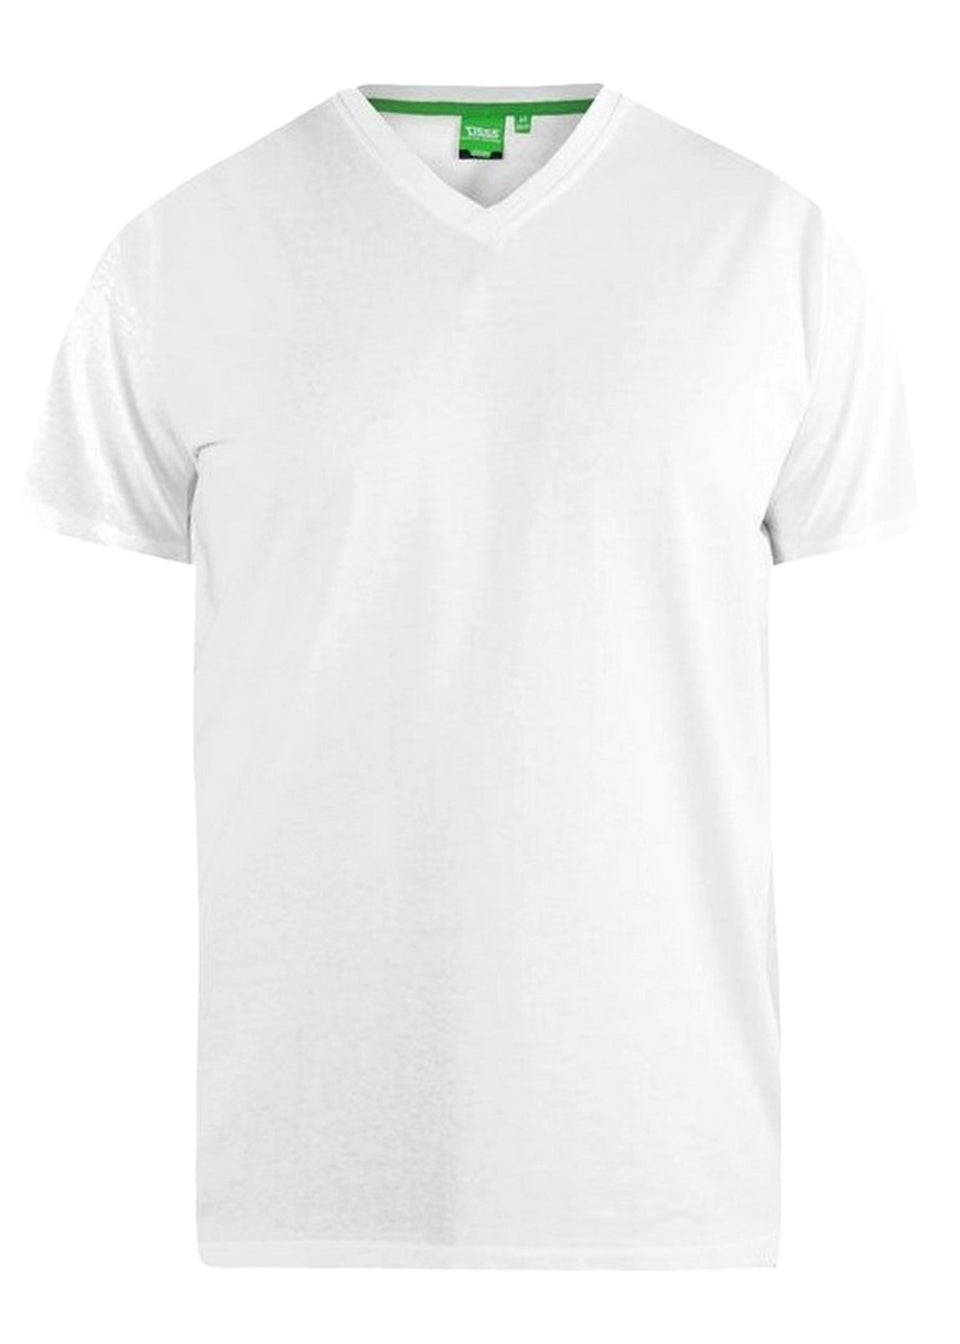 Duke Black/White Fenton Kingsize Round Neck T-shirts (Pack of 2)